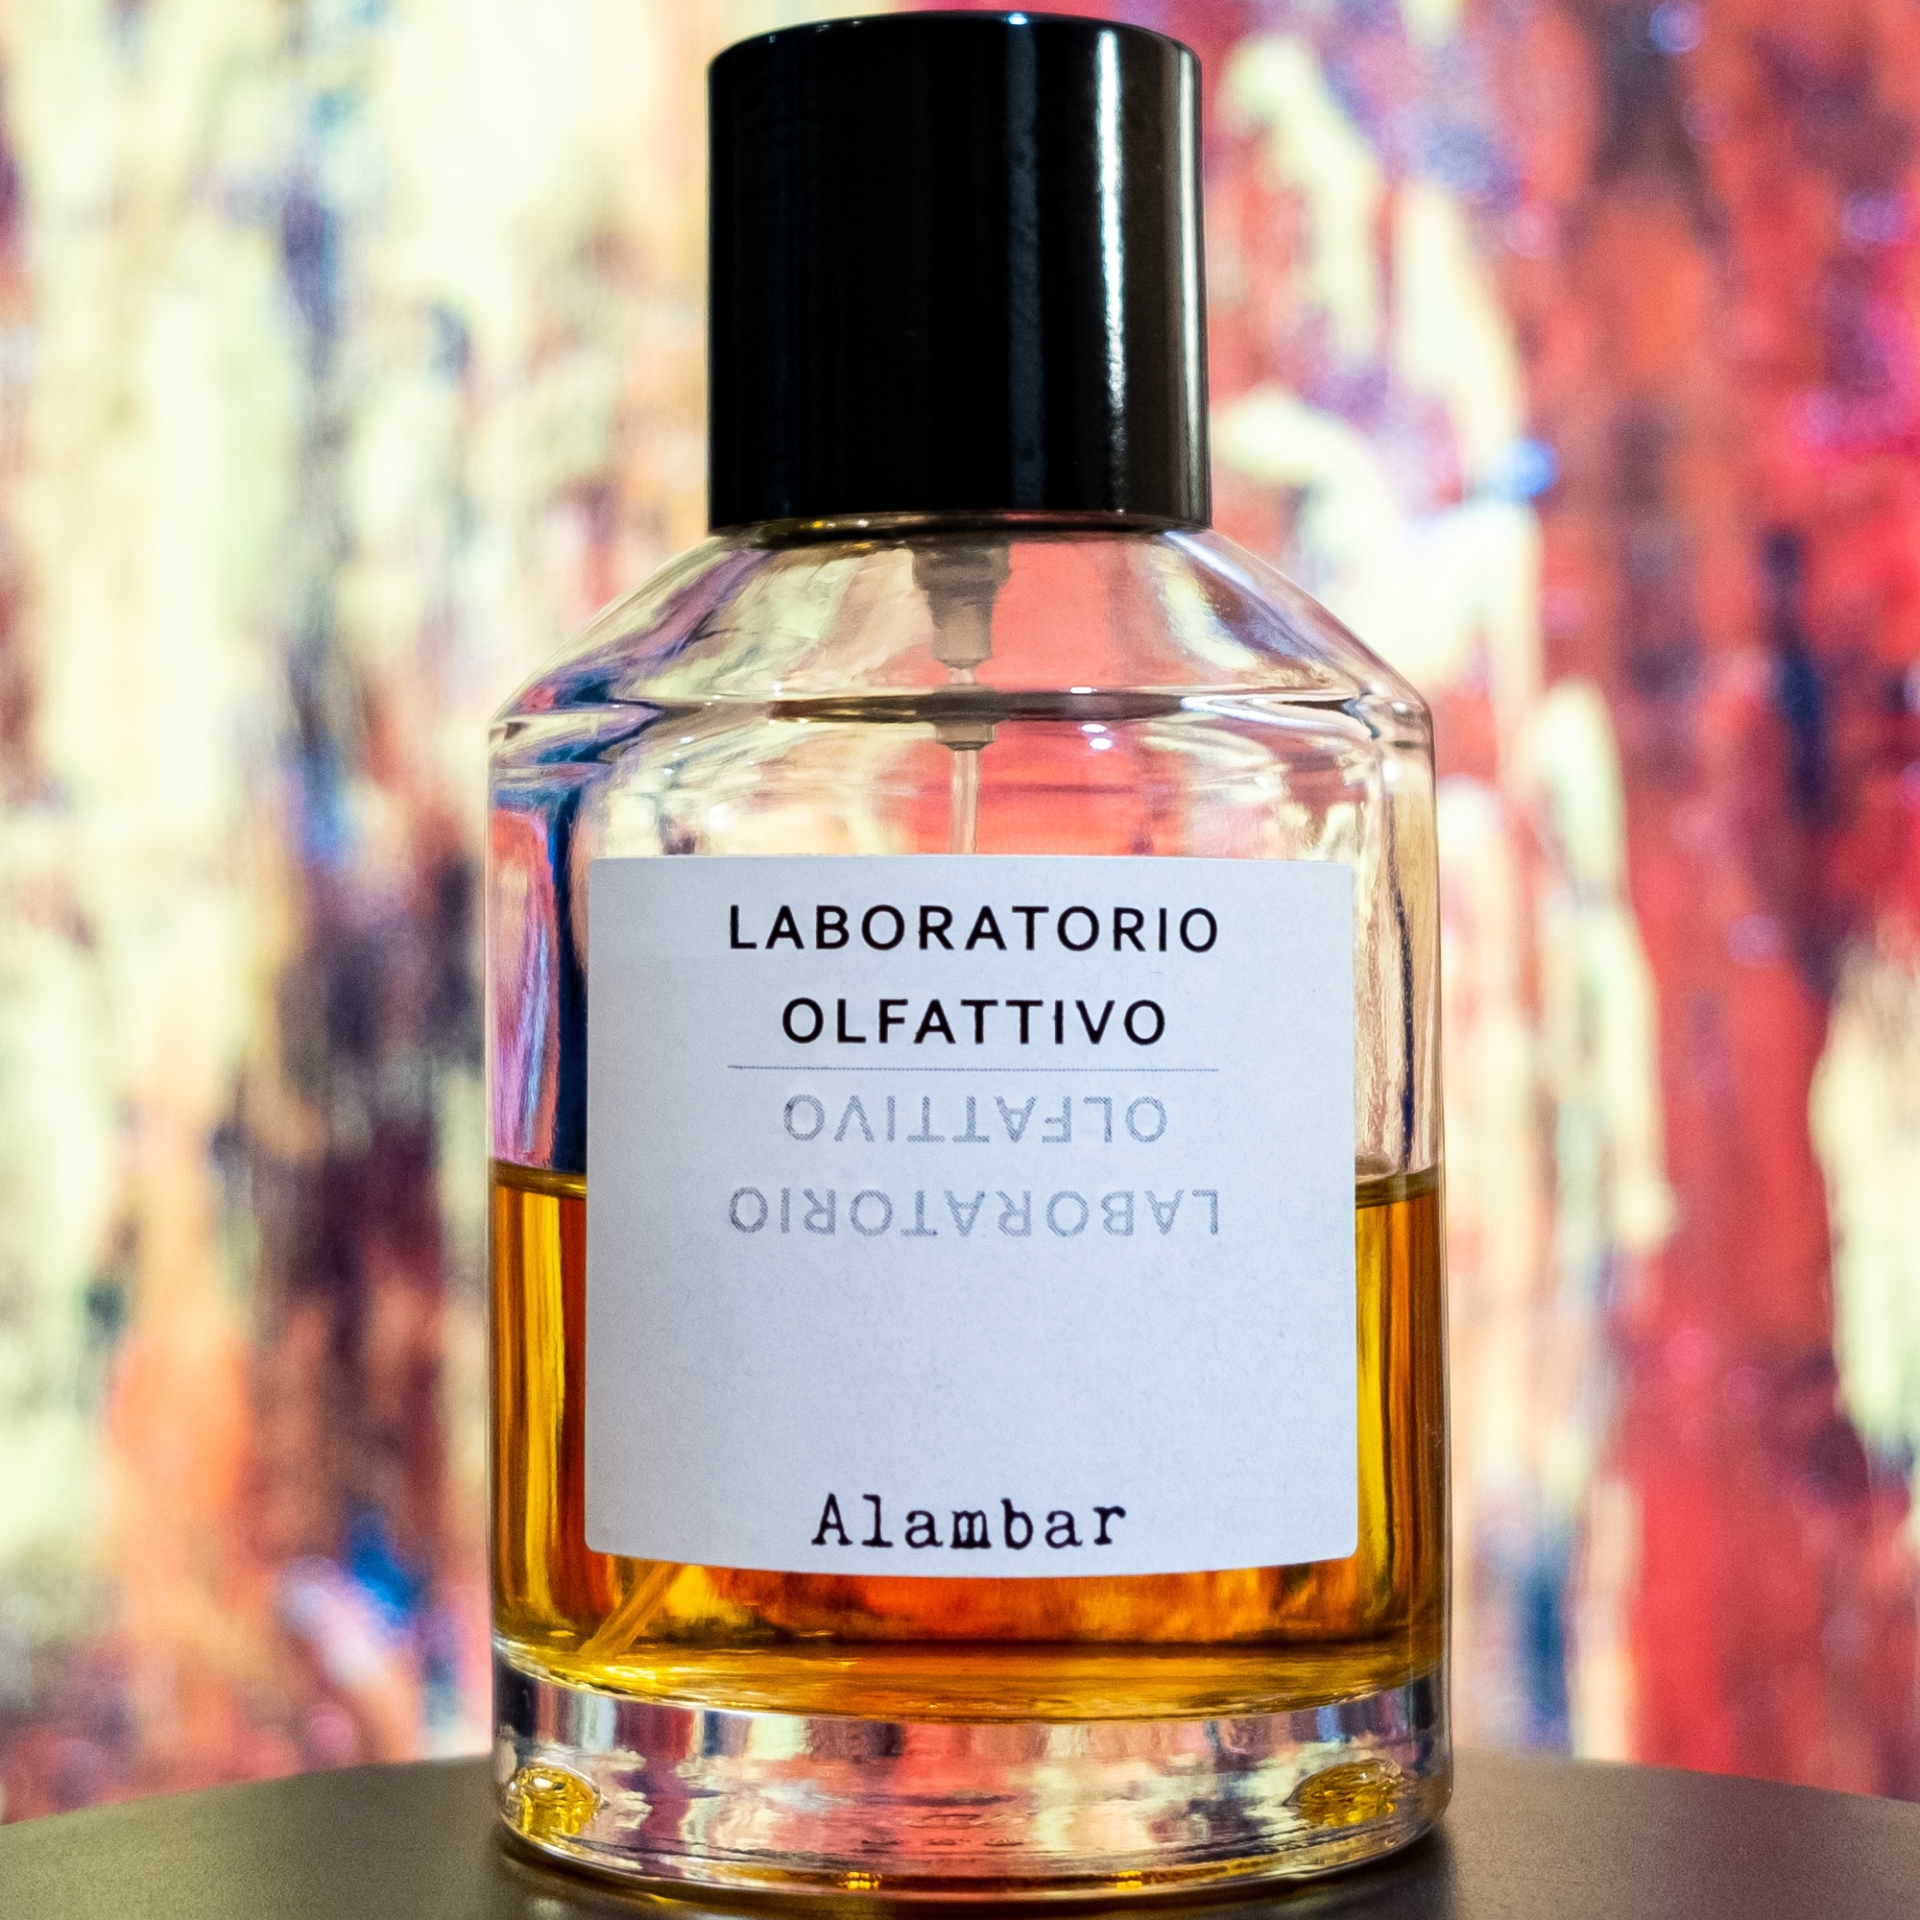 laboratorio-olfattivo-alambar